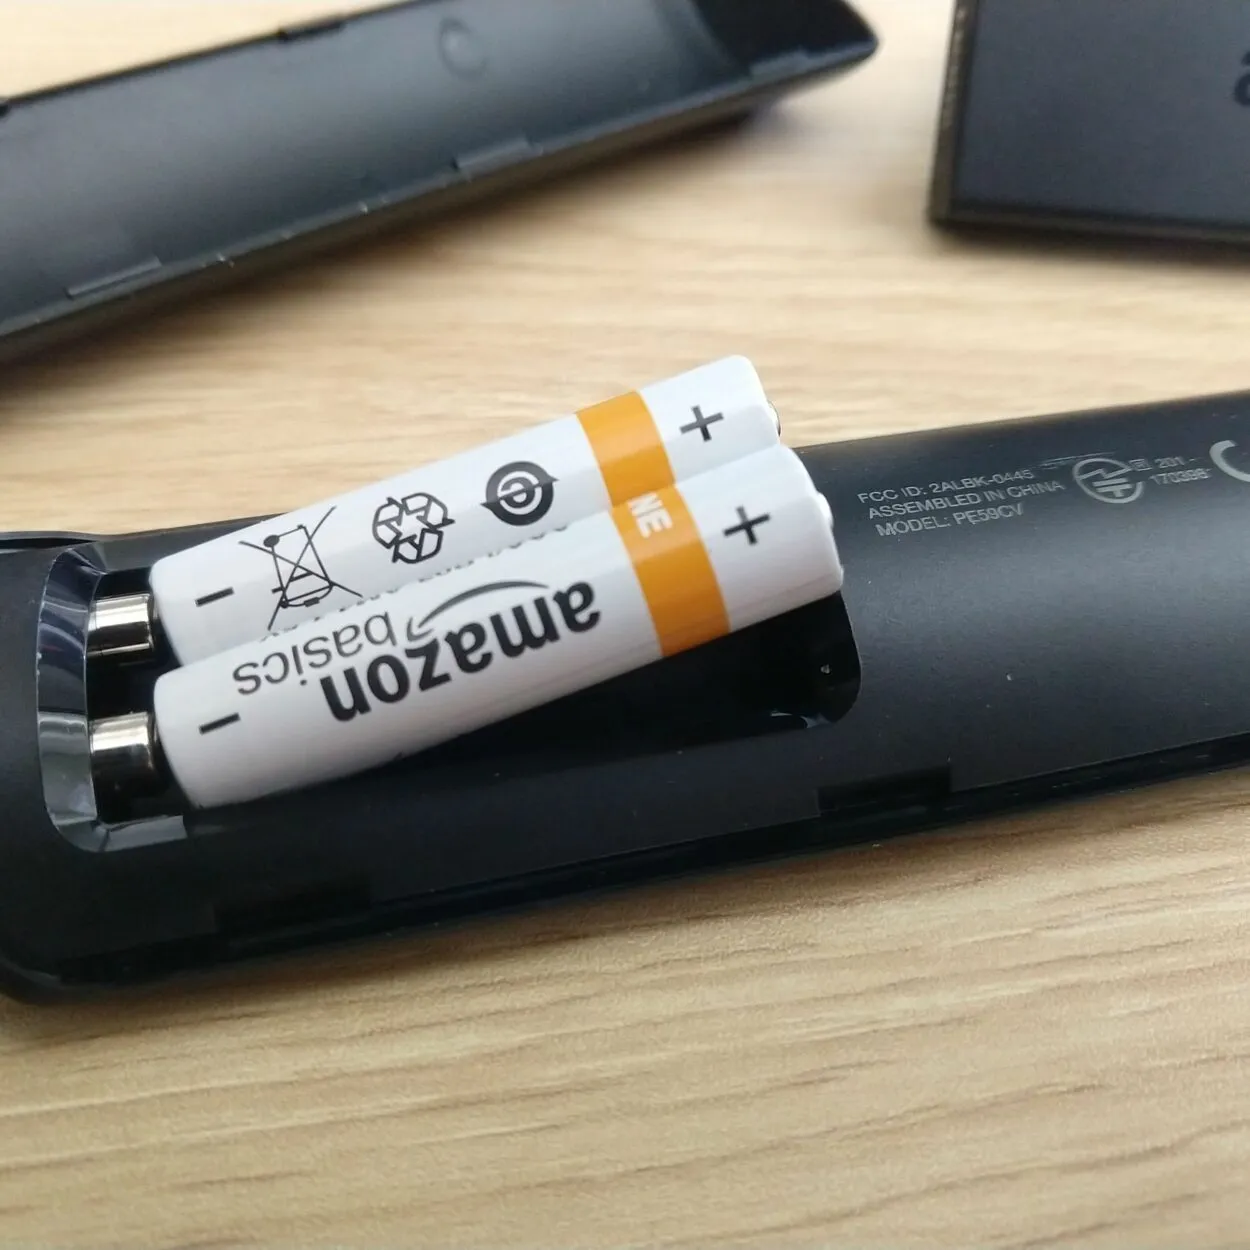 Two Amazon Basics AA Batteries for Amazon firetv remote.